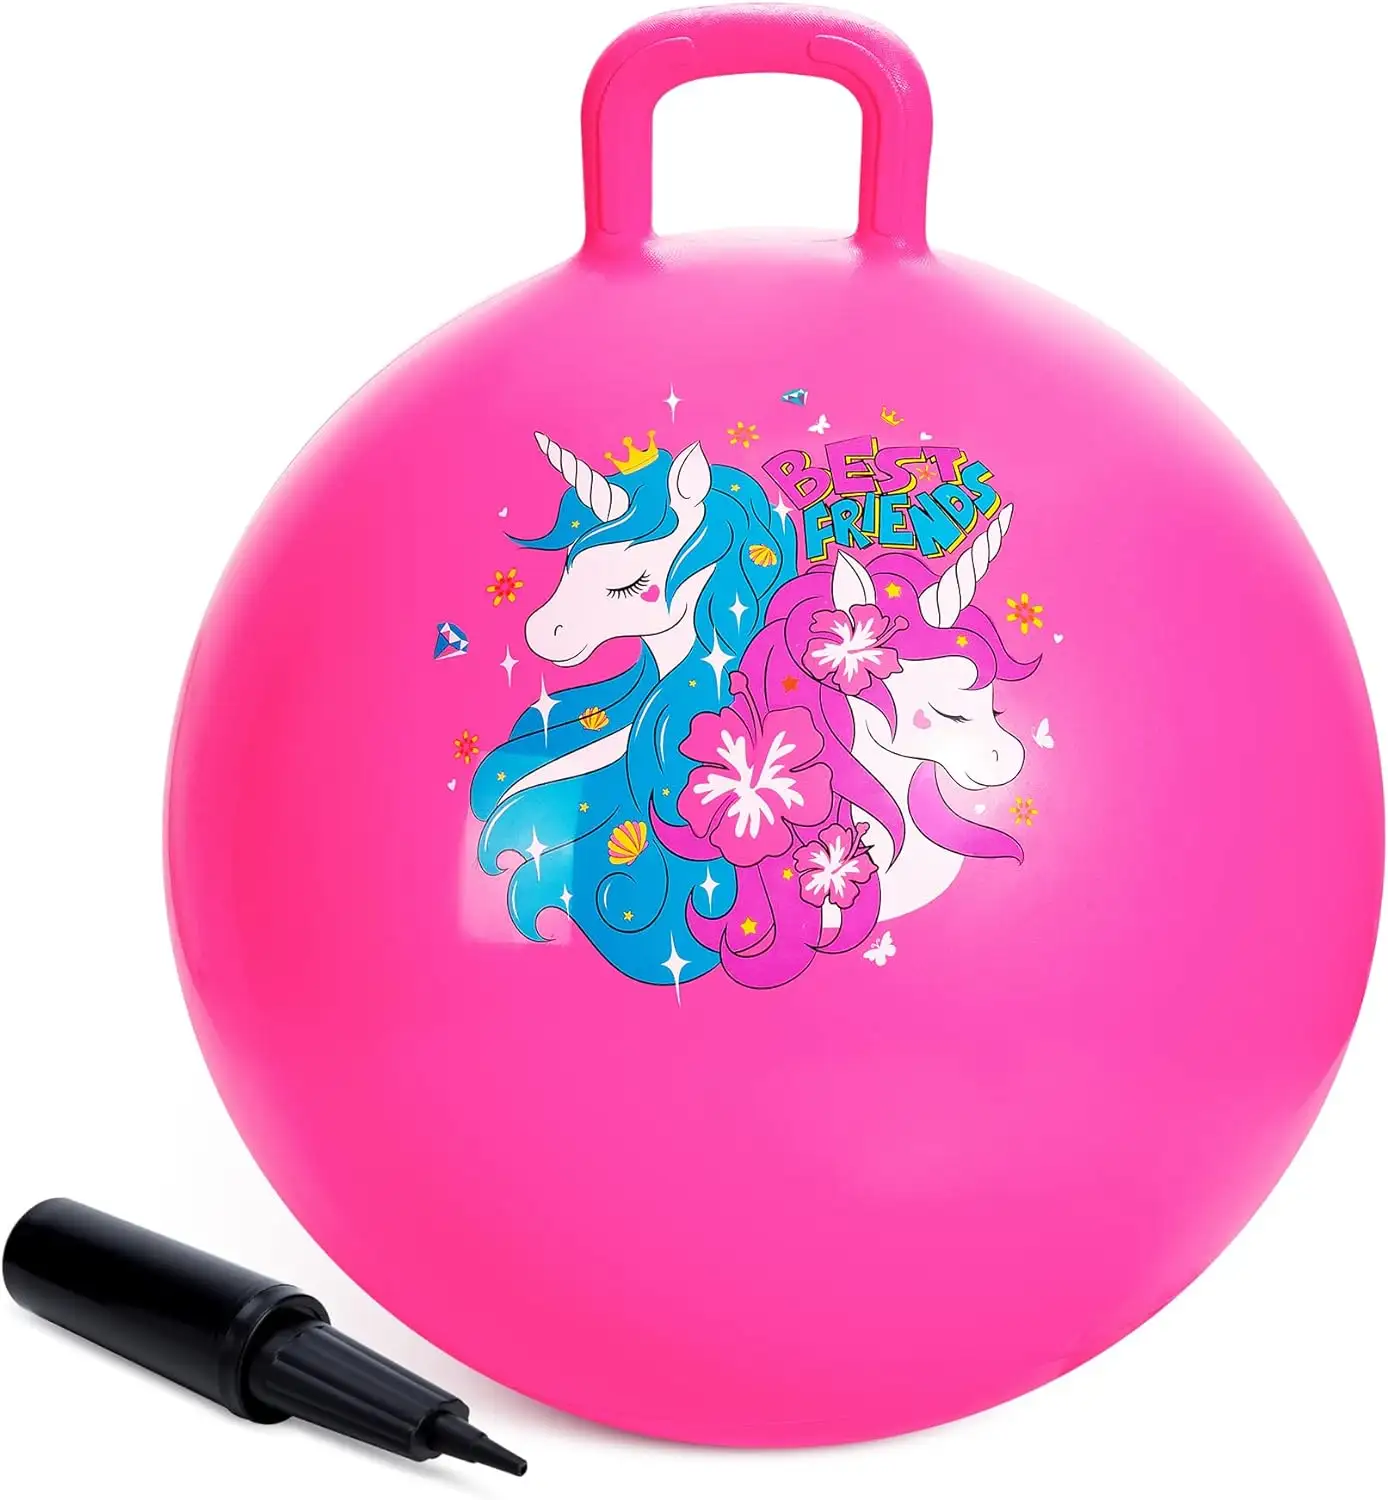 Brinquedo Indoor Jogo Inflável Sit on Jumping Pink Bouncy Hopper Ball com Alça